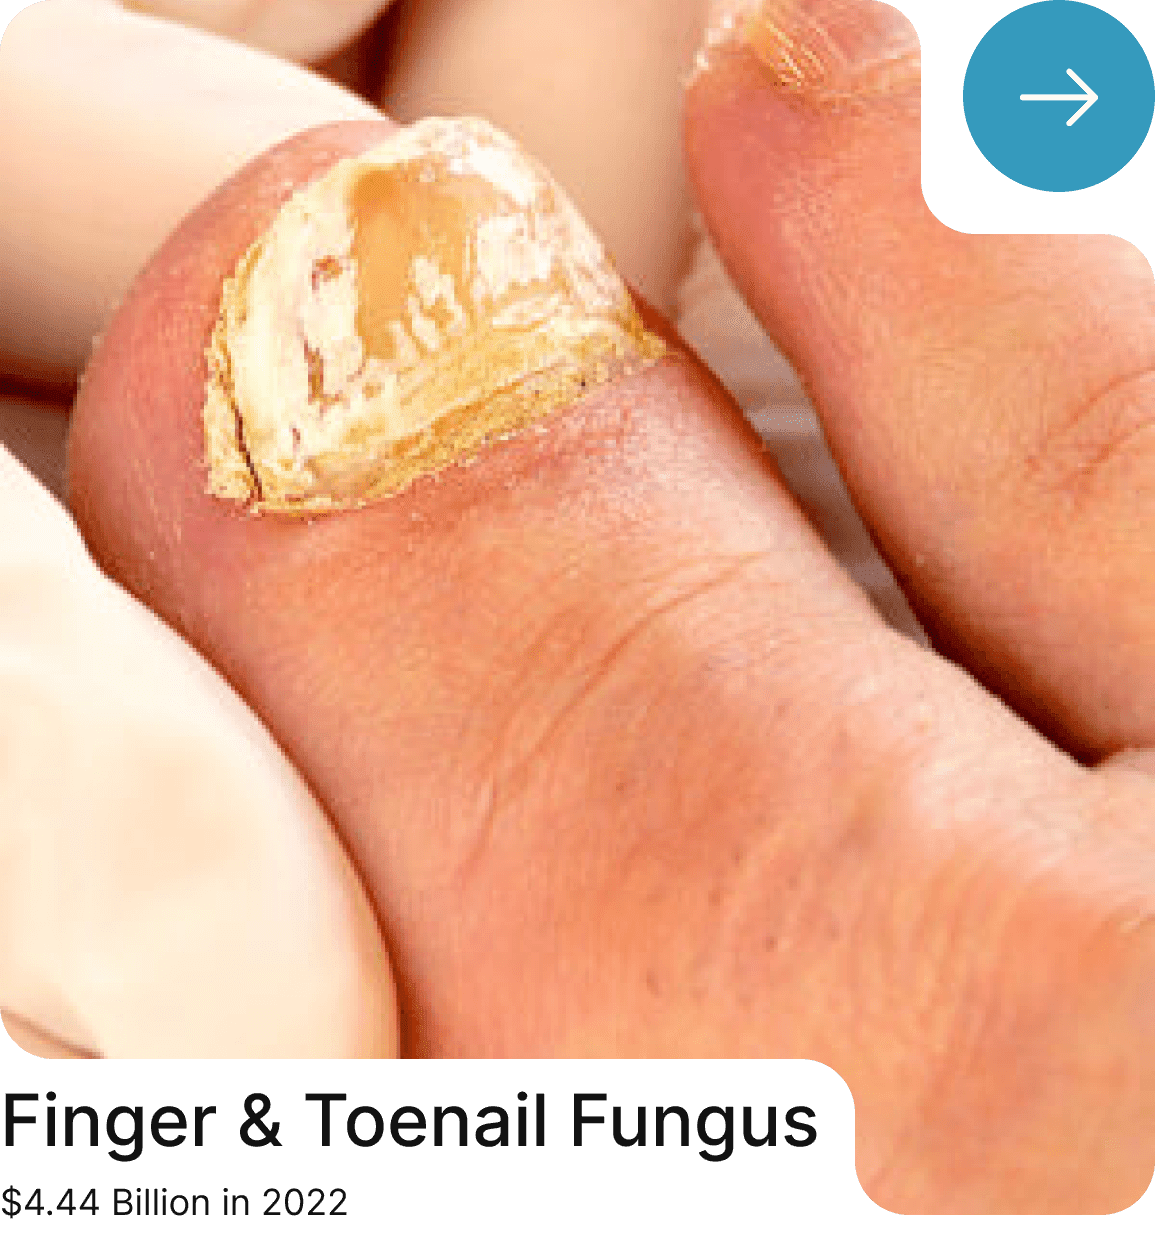 Finger & Toenail Fungus Treatment